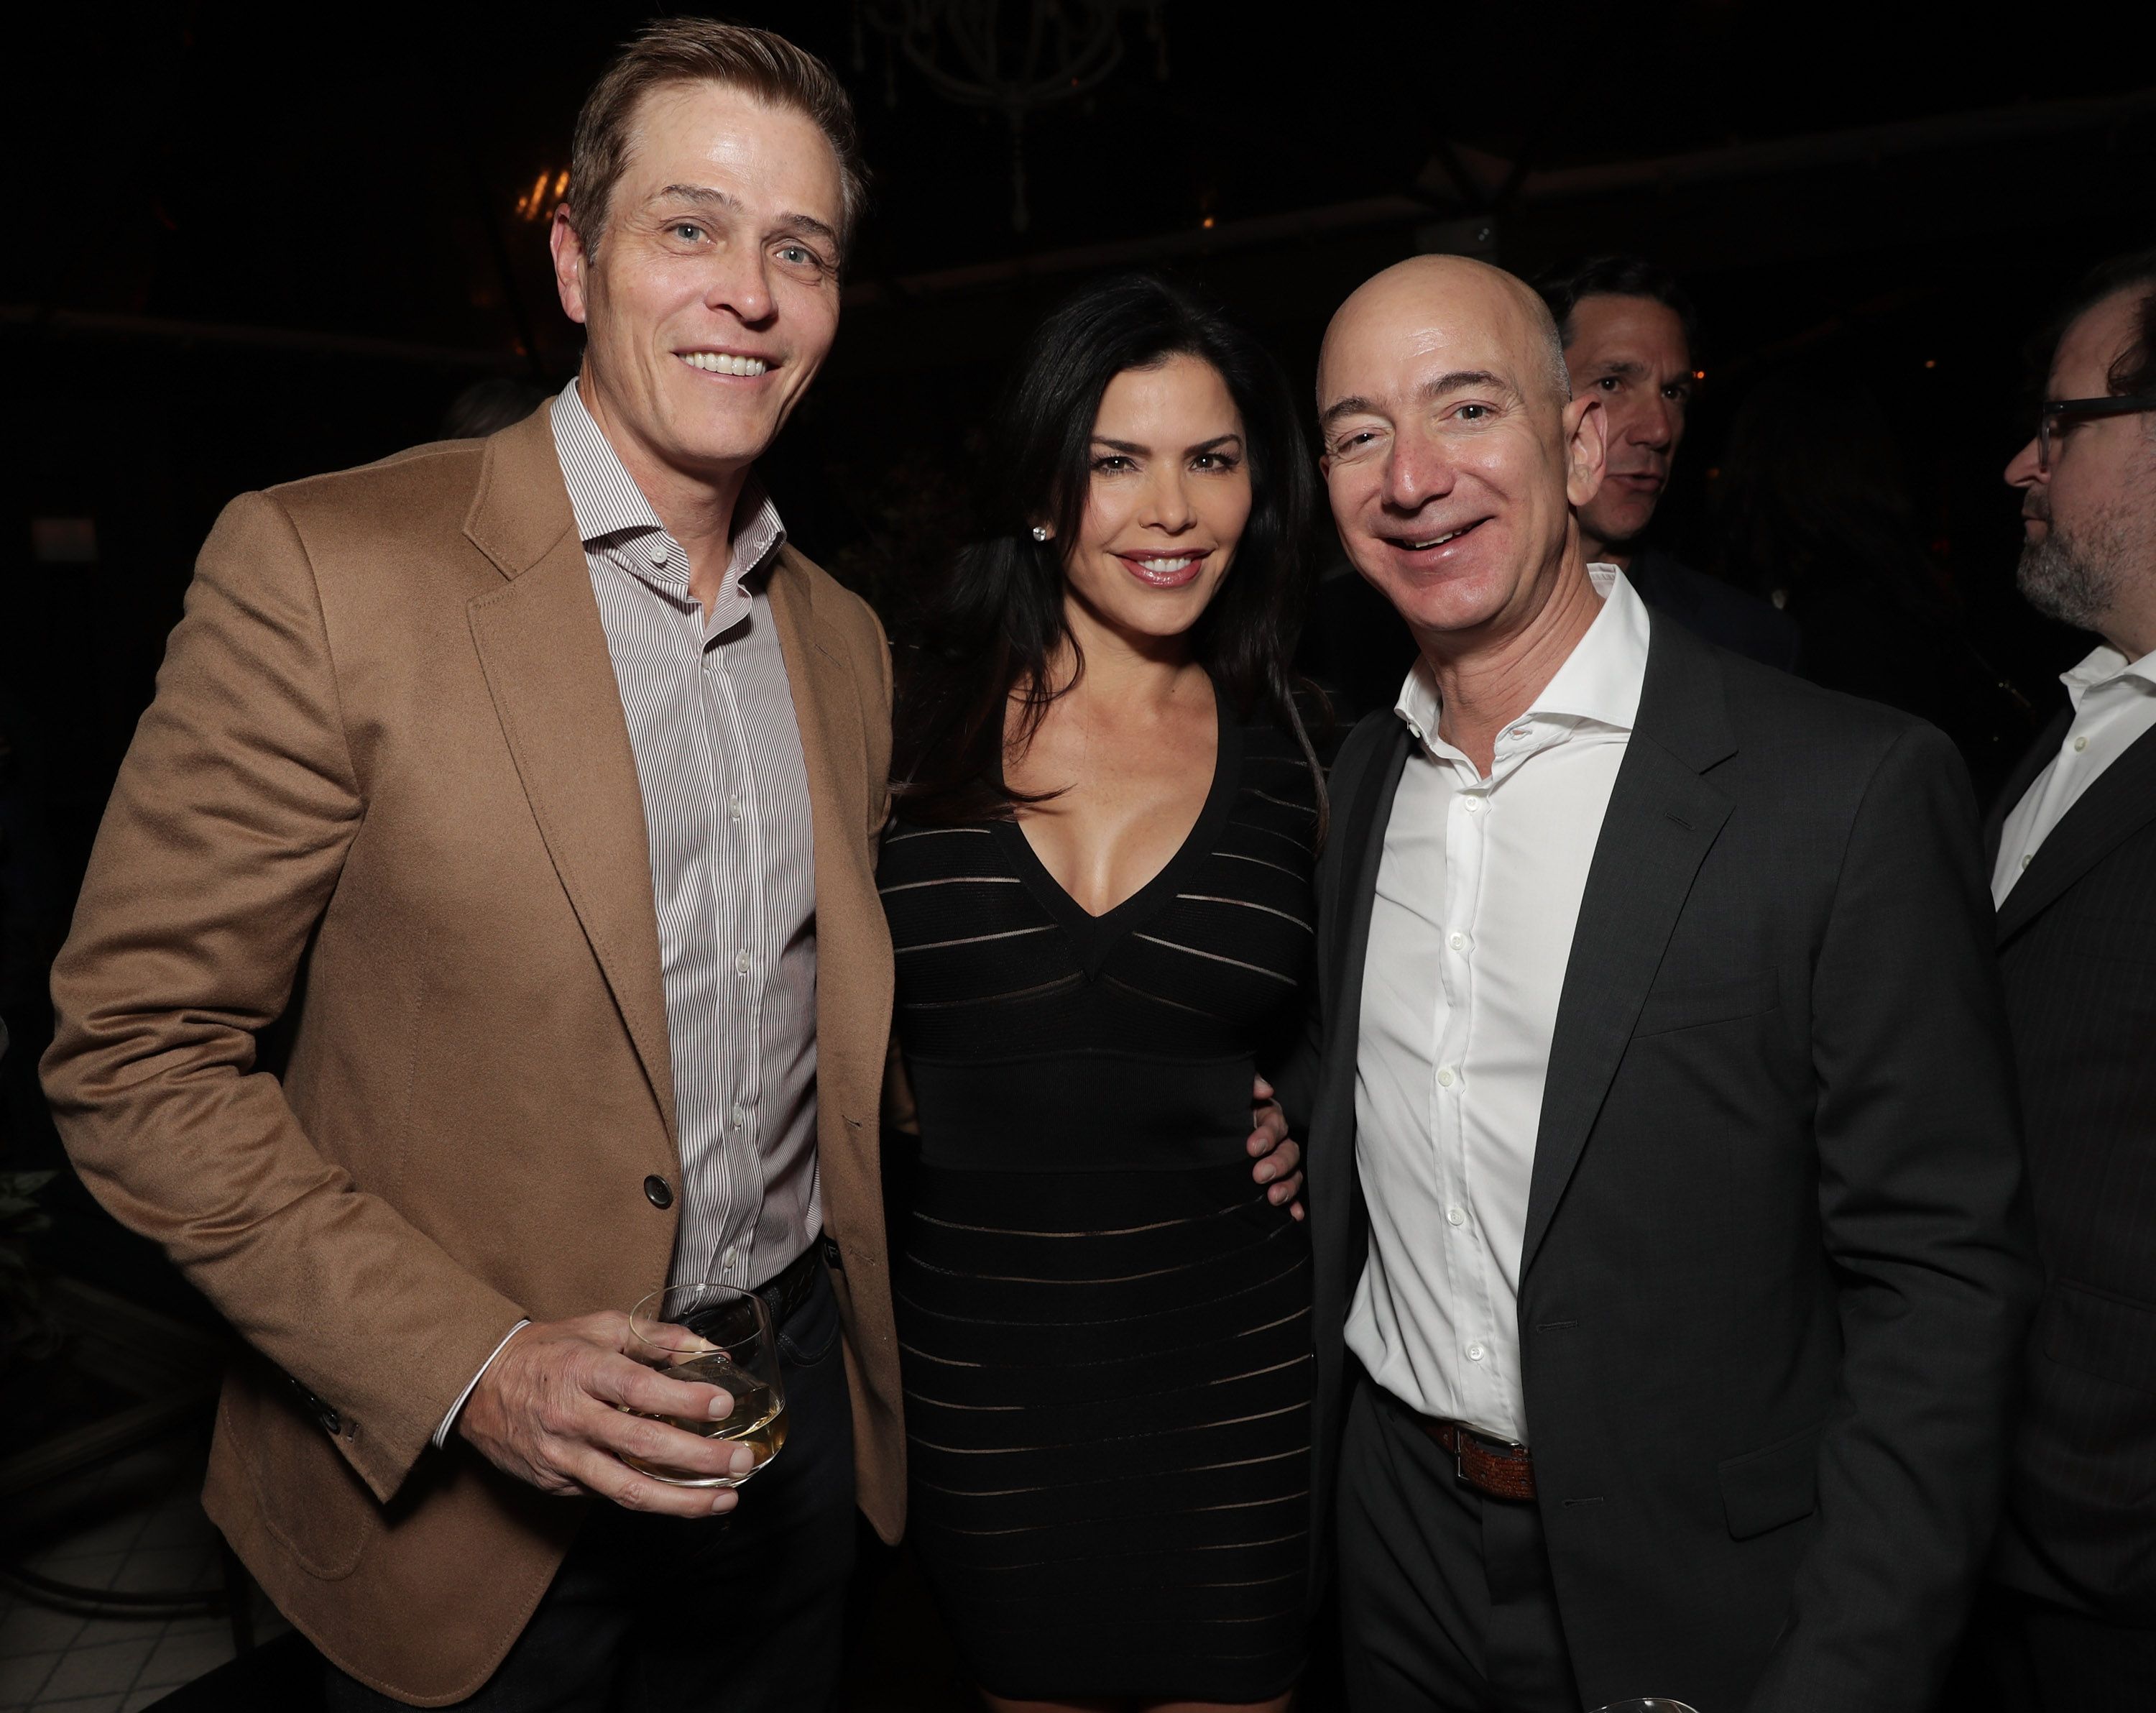 Jeff Bezos and Lauren Sanchez Relationship Timeline